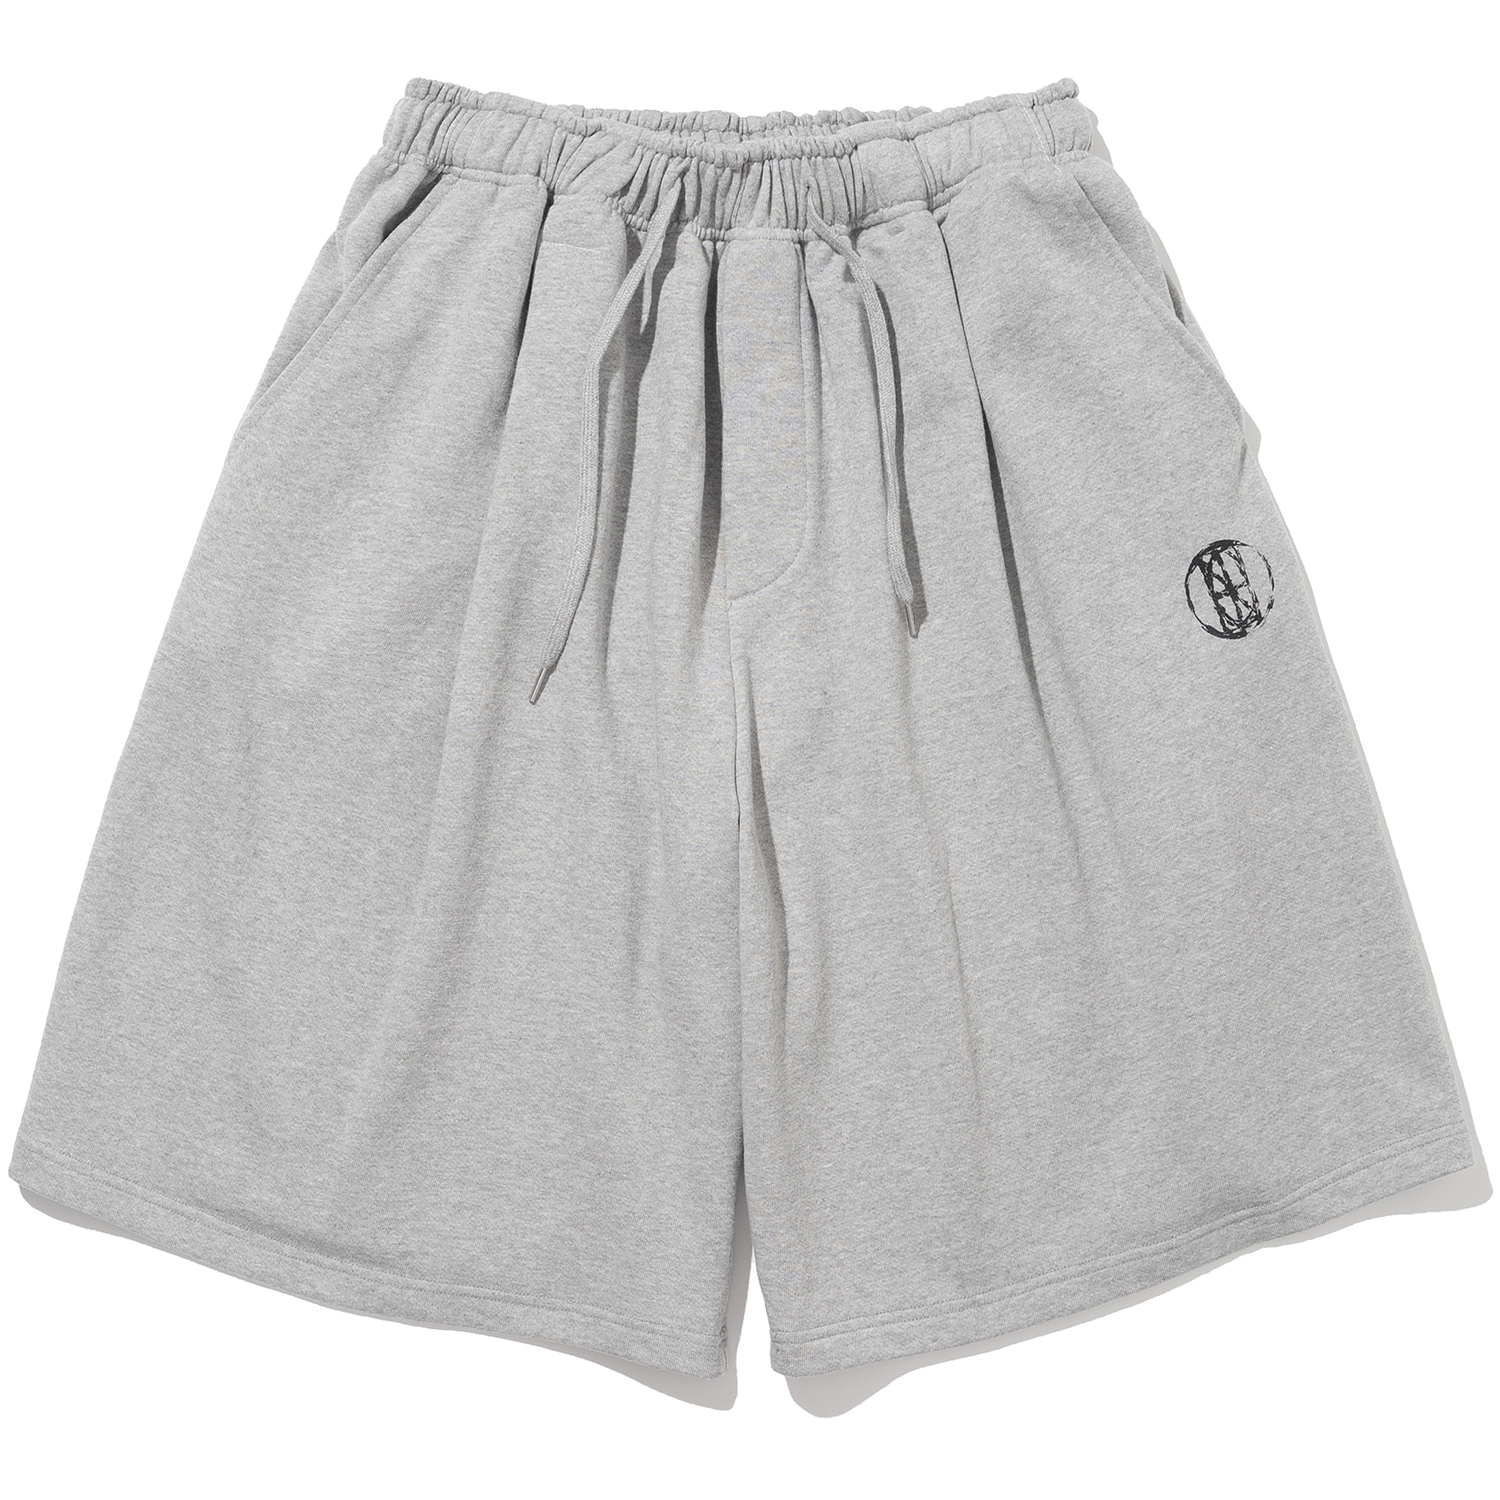 Bermuda One Tuck Sweat Shorts - Grey,NOT4NERD